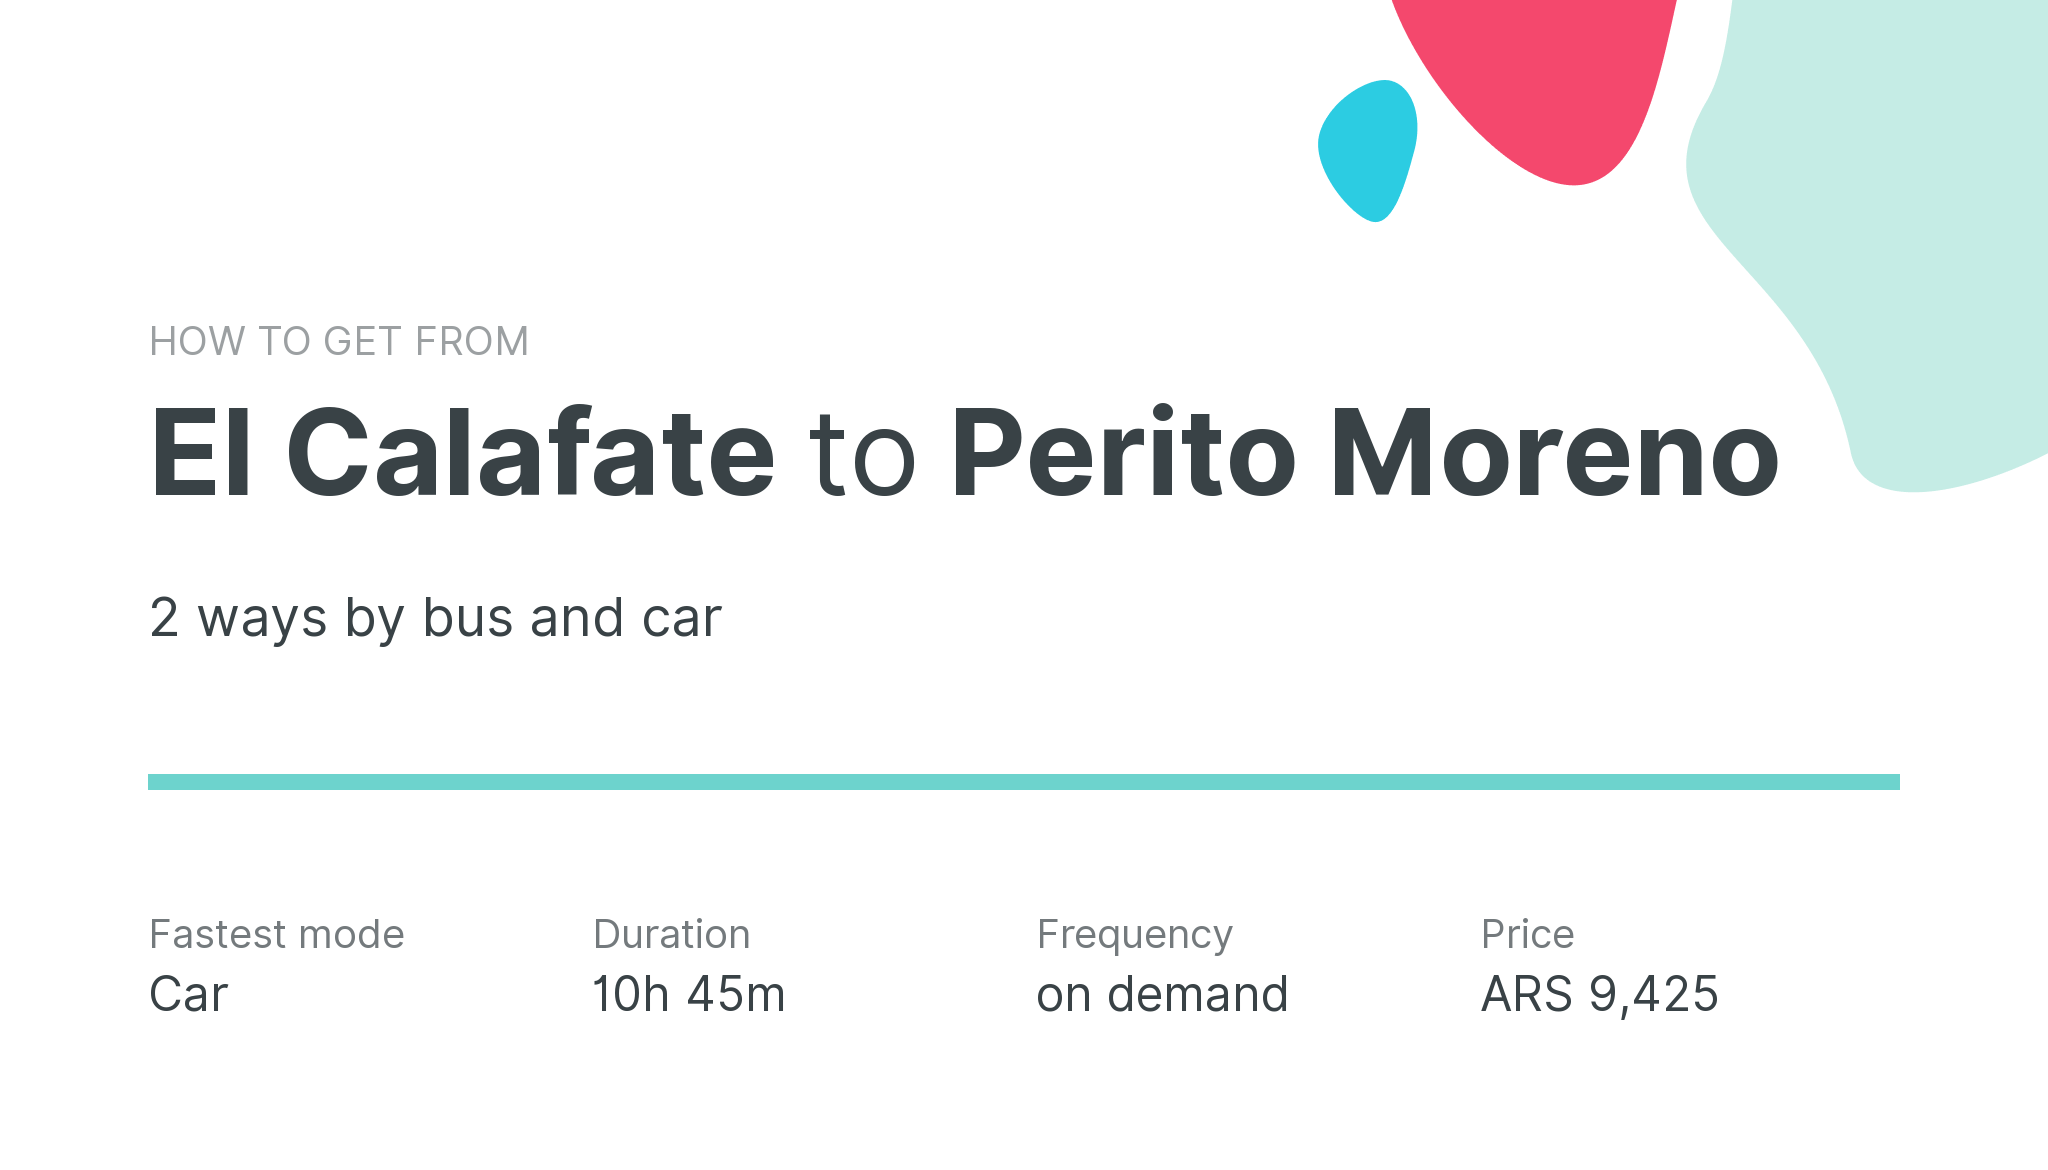 How do I get from El Calafate to Perito Moreno